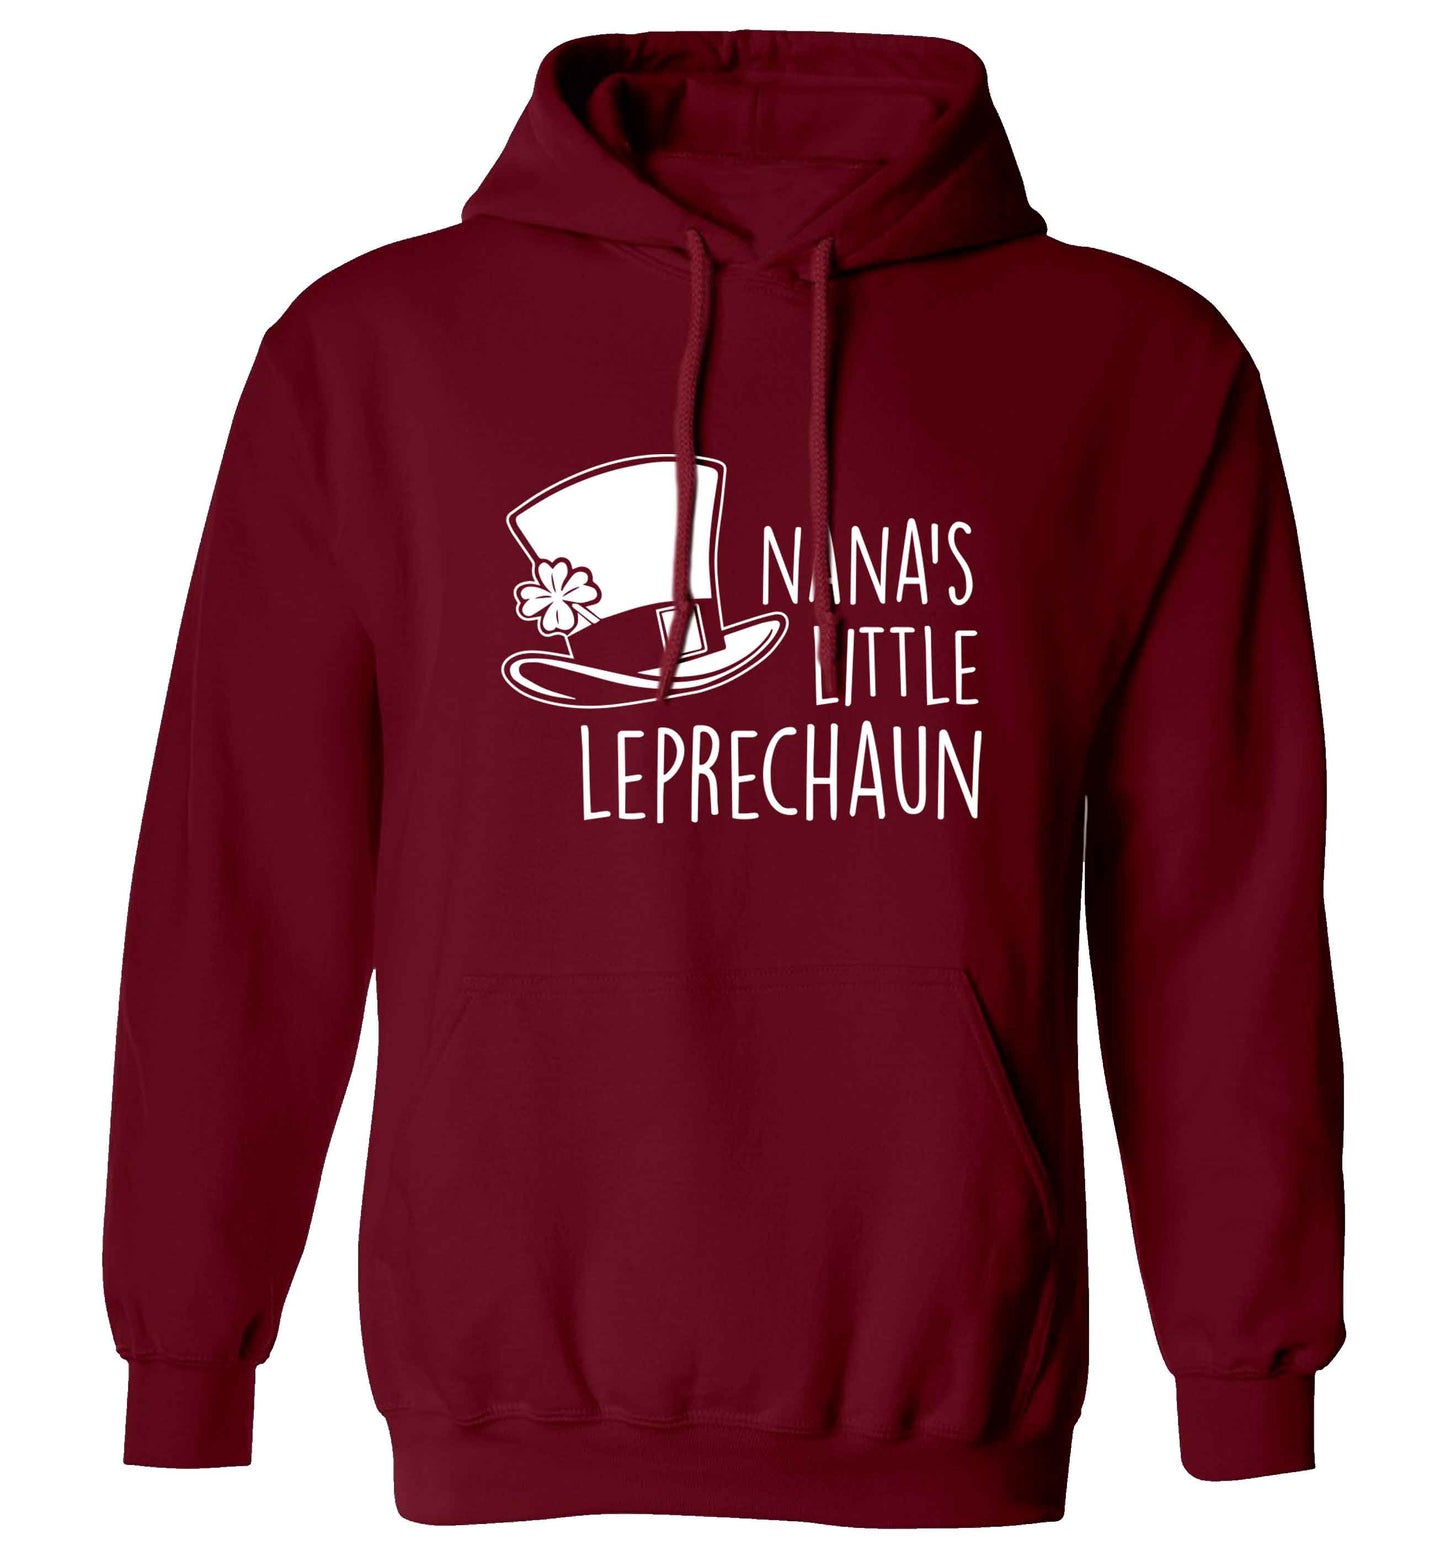 Nana's little leprechaun adults unisex maroon hoodie 2XL